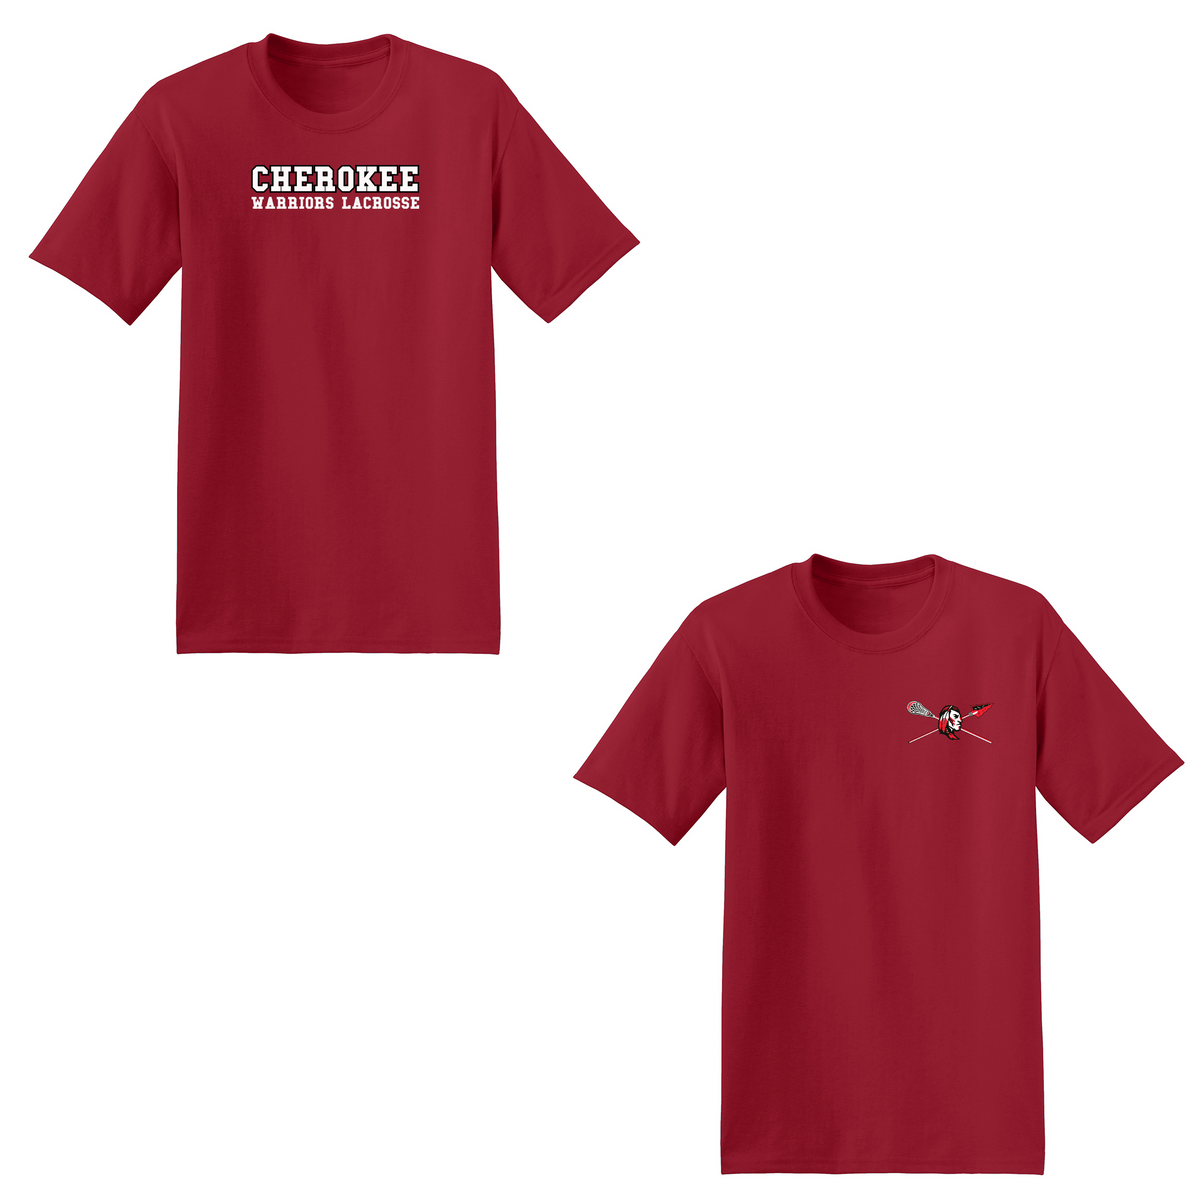 Cherokee Warriors Lacrosse T-Shirt